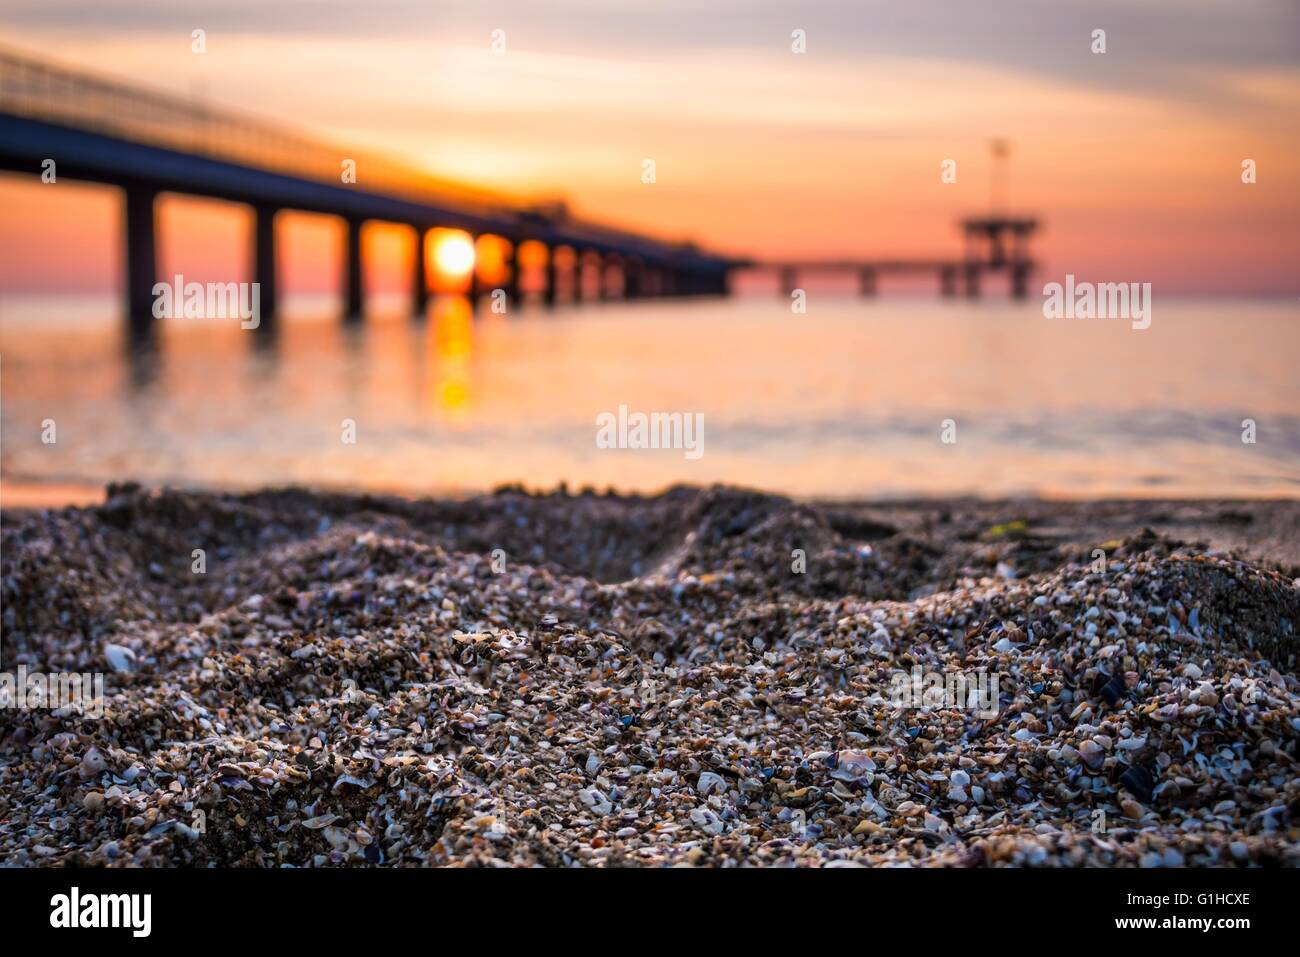 Sand on the beach. Blurred background of bridge and sunrise. Stock Photo